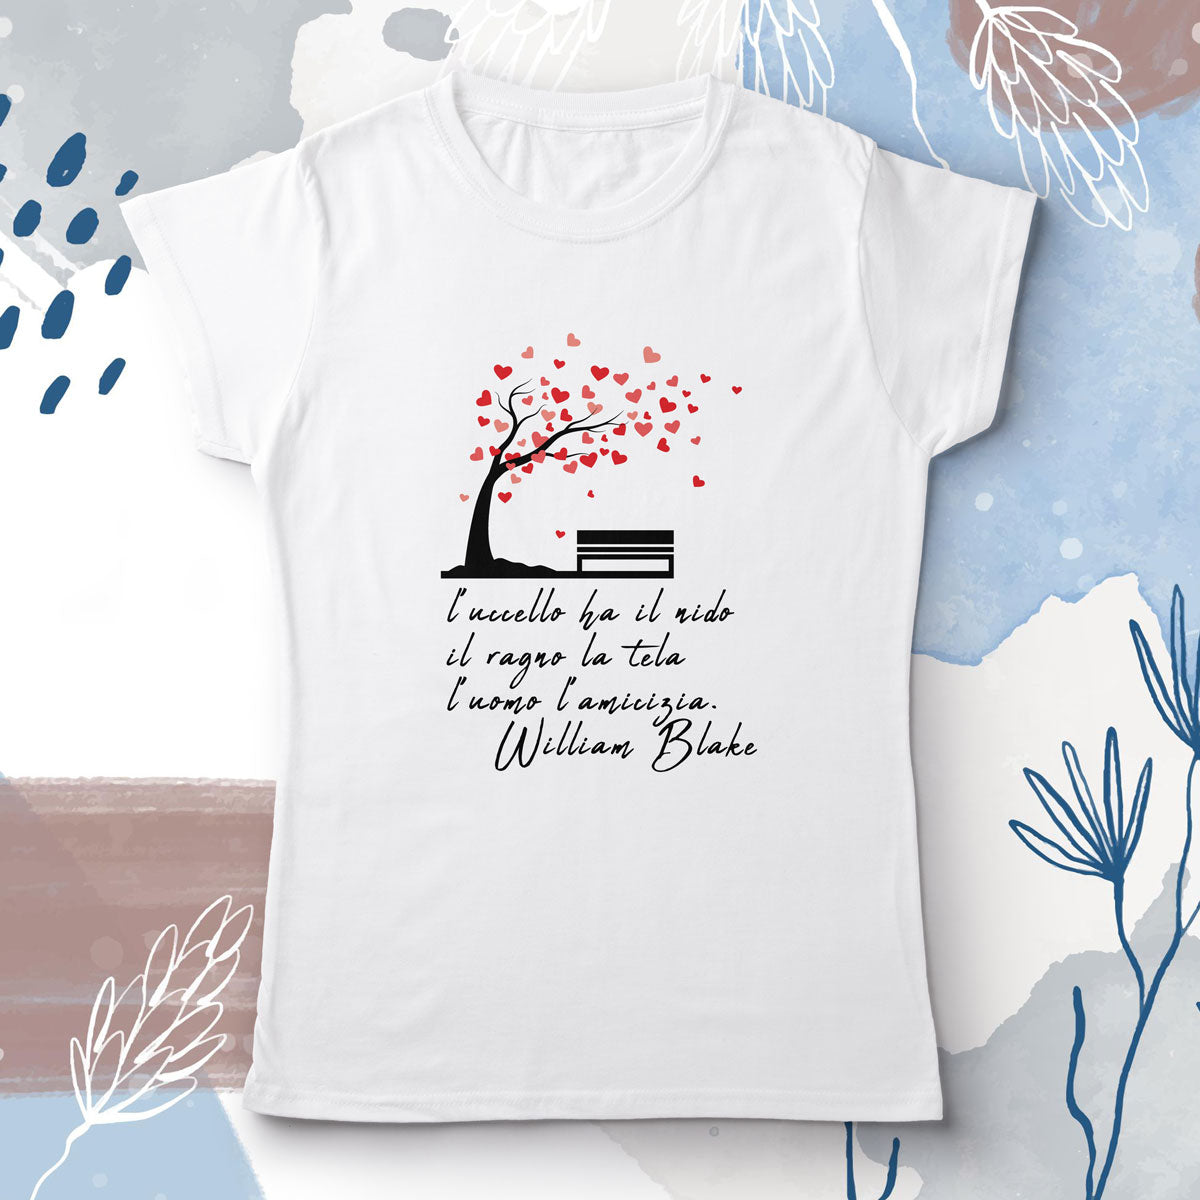 T-shirt bianca per donna William Blake